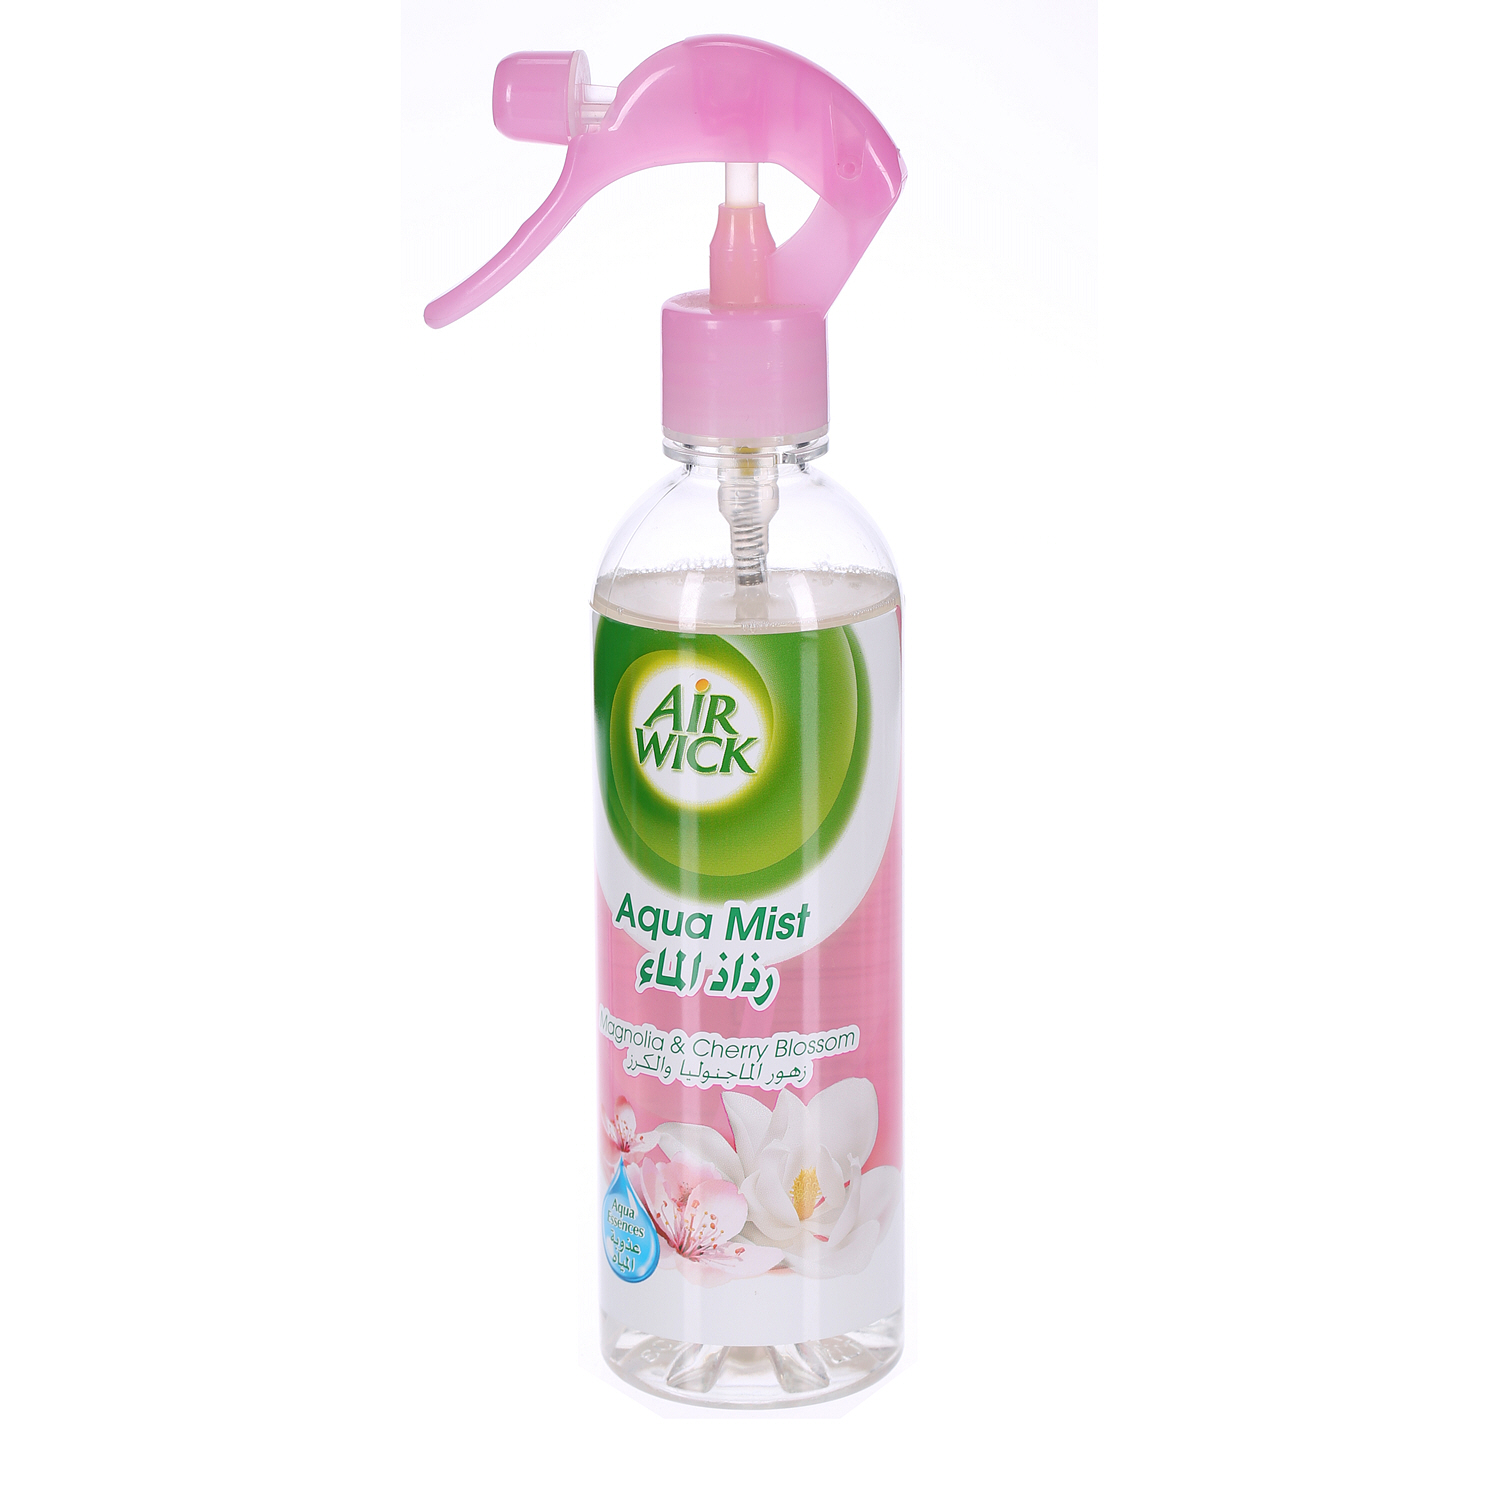 Air Wick Aqua Mist Magnolia & Cherry blossom 345 ml